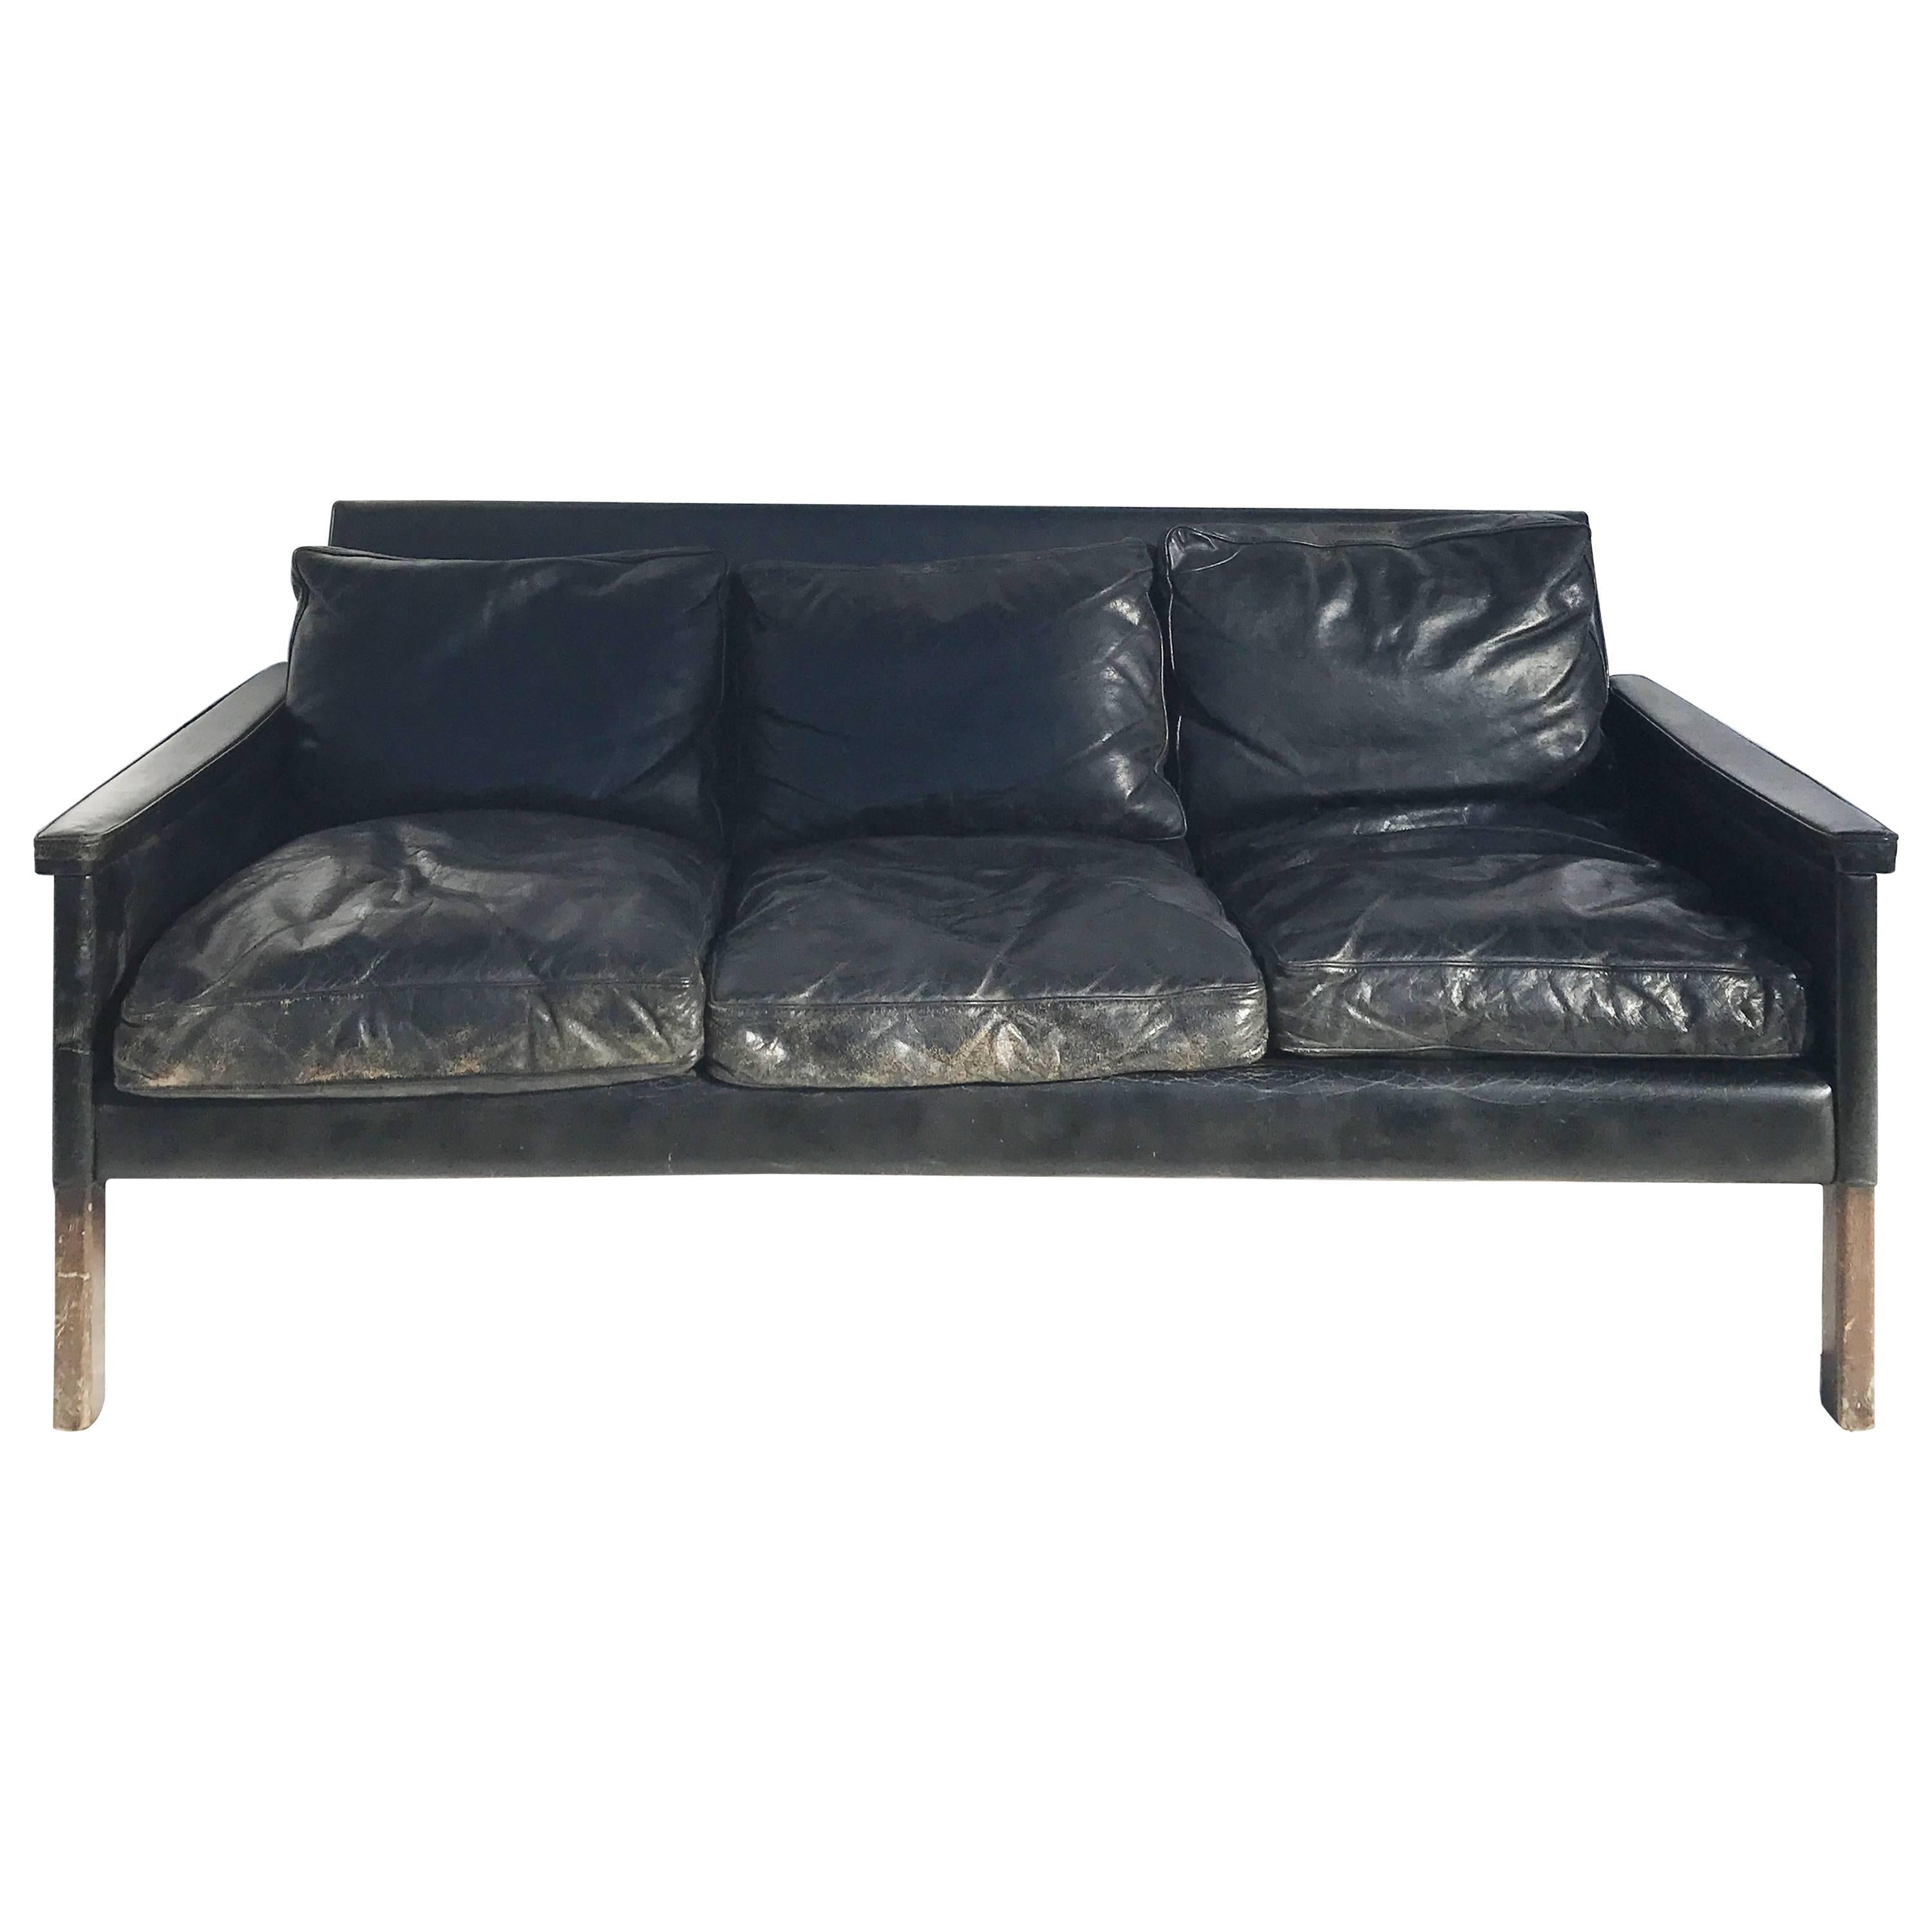 Vintage-Sofa aus schwarzem Leder, ca. 20. Jahrhundert